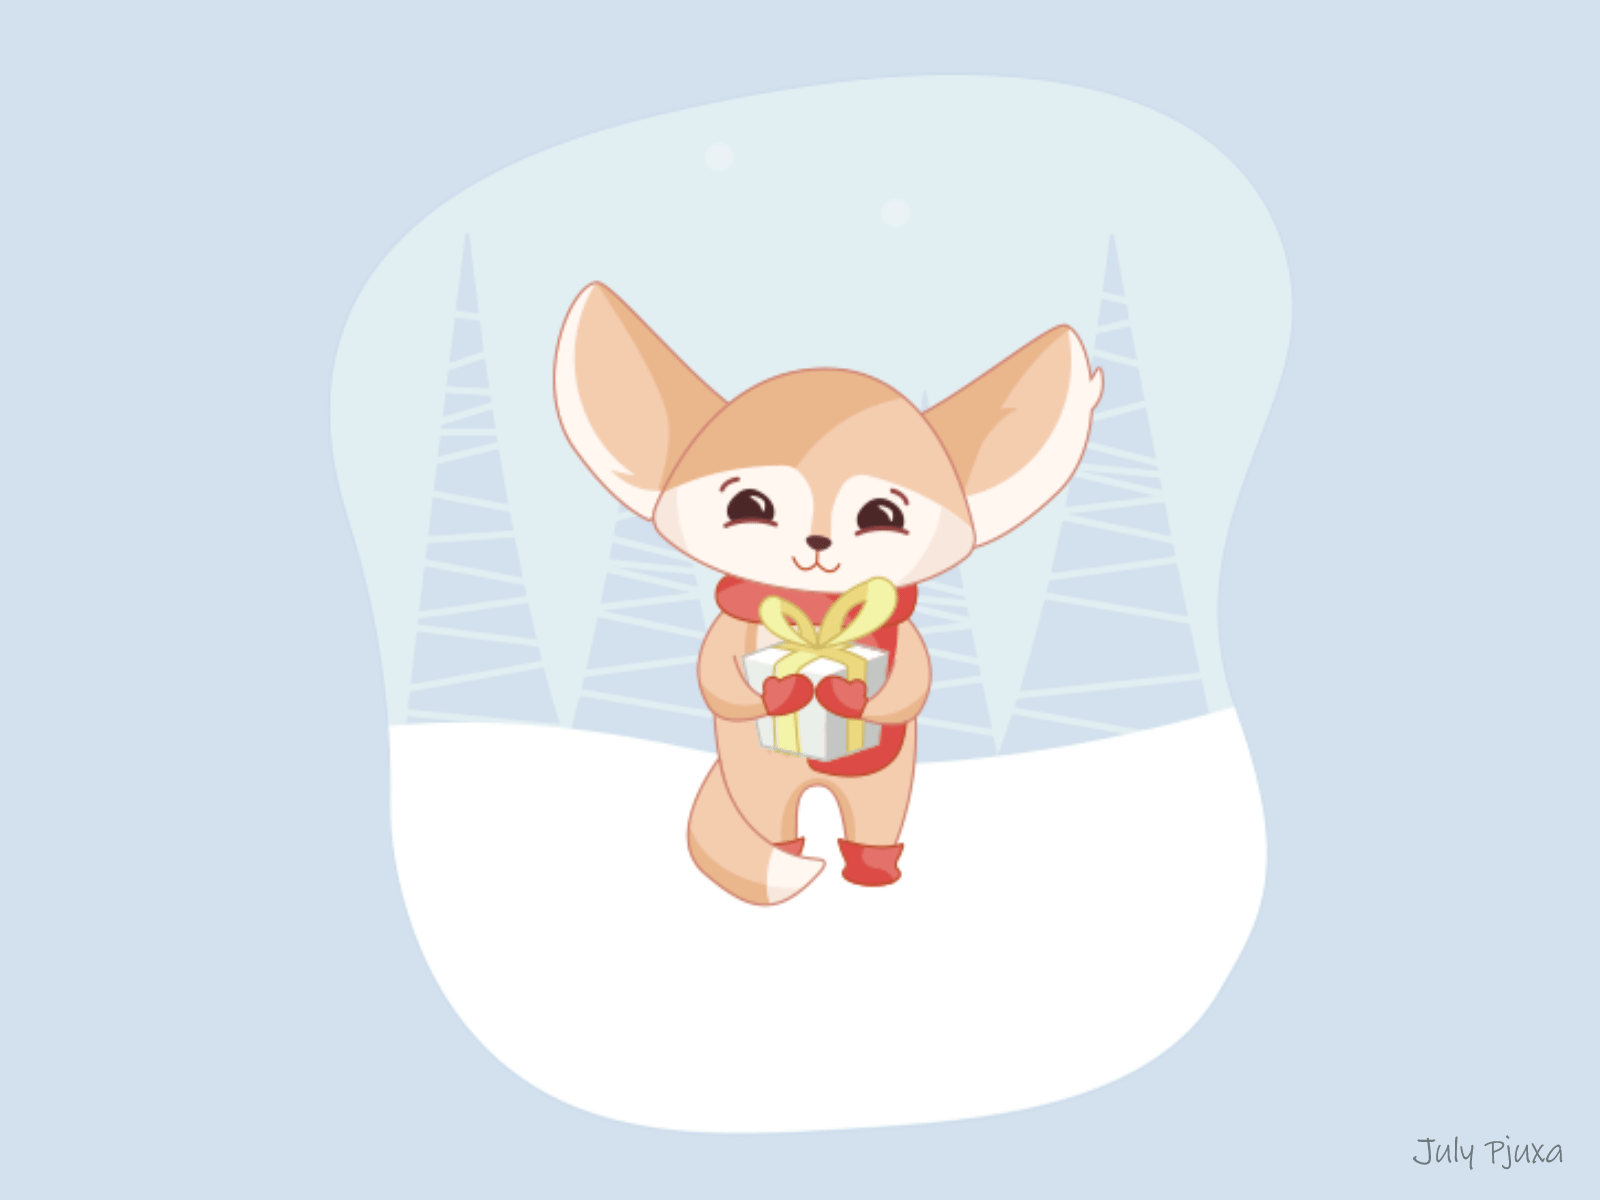 Christmas Fennec Fox: story 0.6 "Gift" after effects animation charachter christmas fennec fennec fox gift julypjuxa vector vector artwork